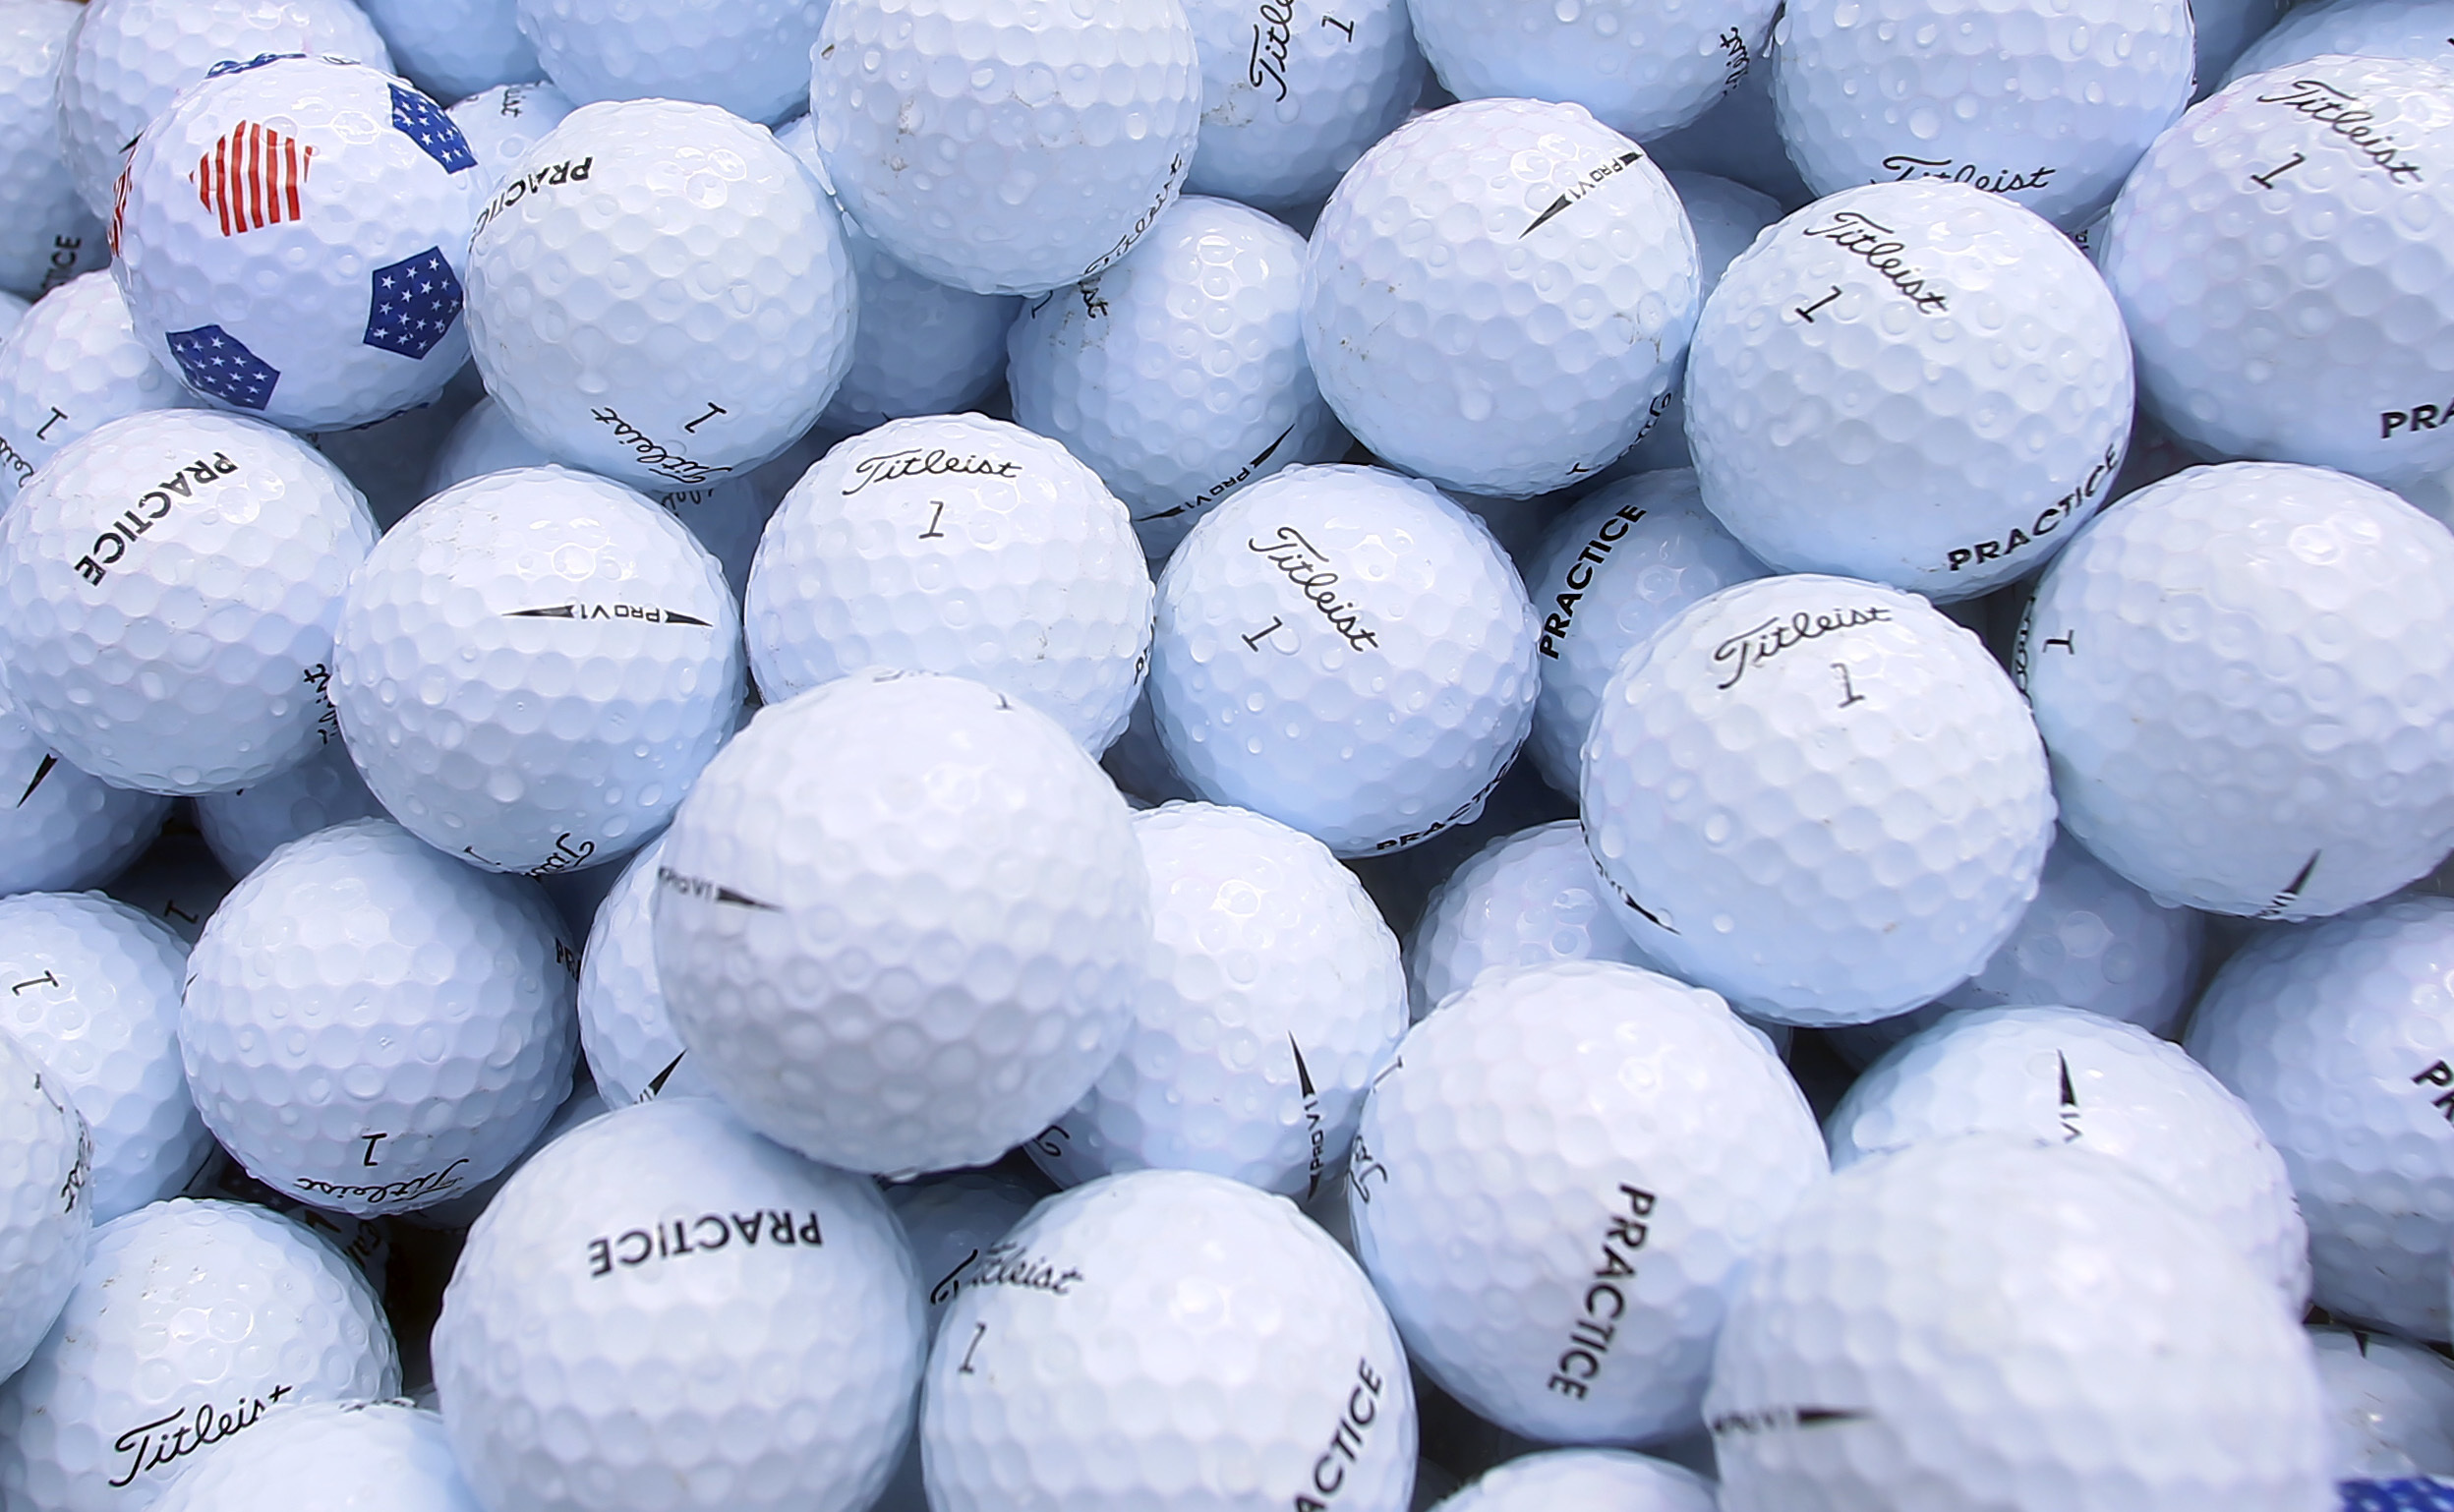 A bucket of practice golf balls